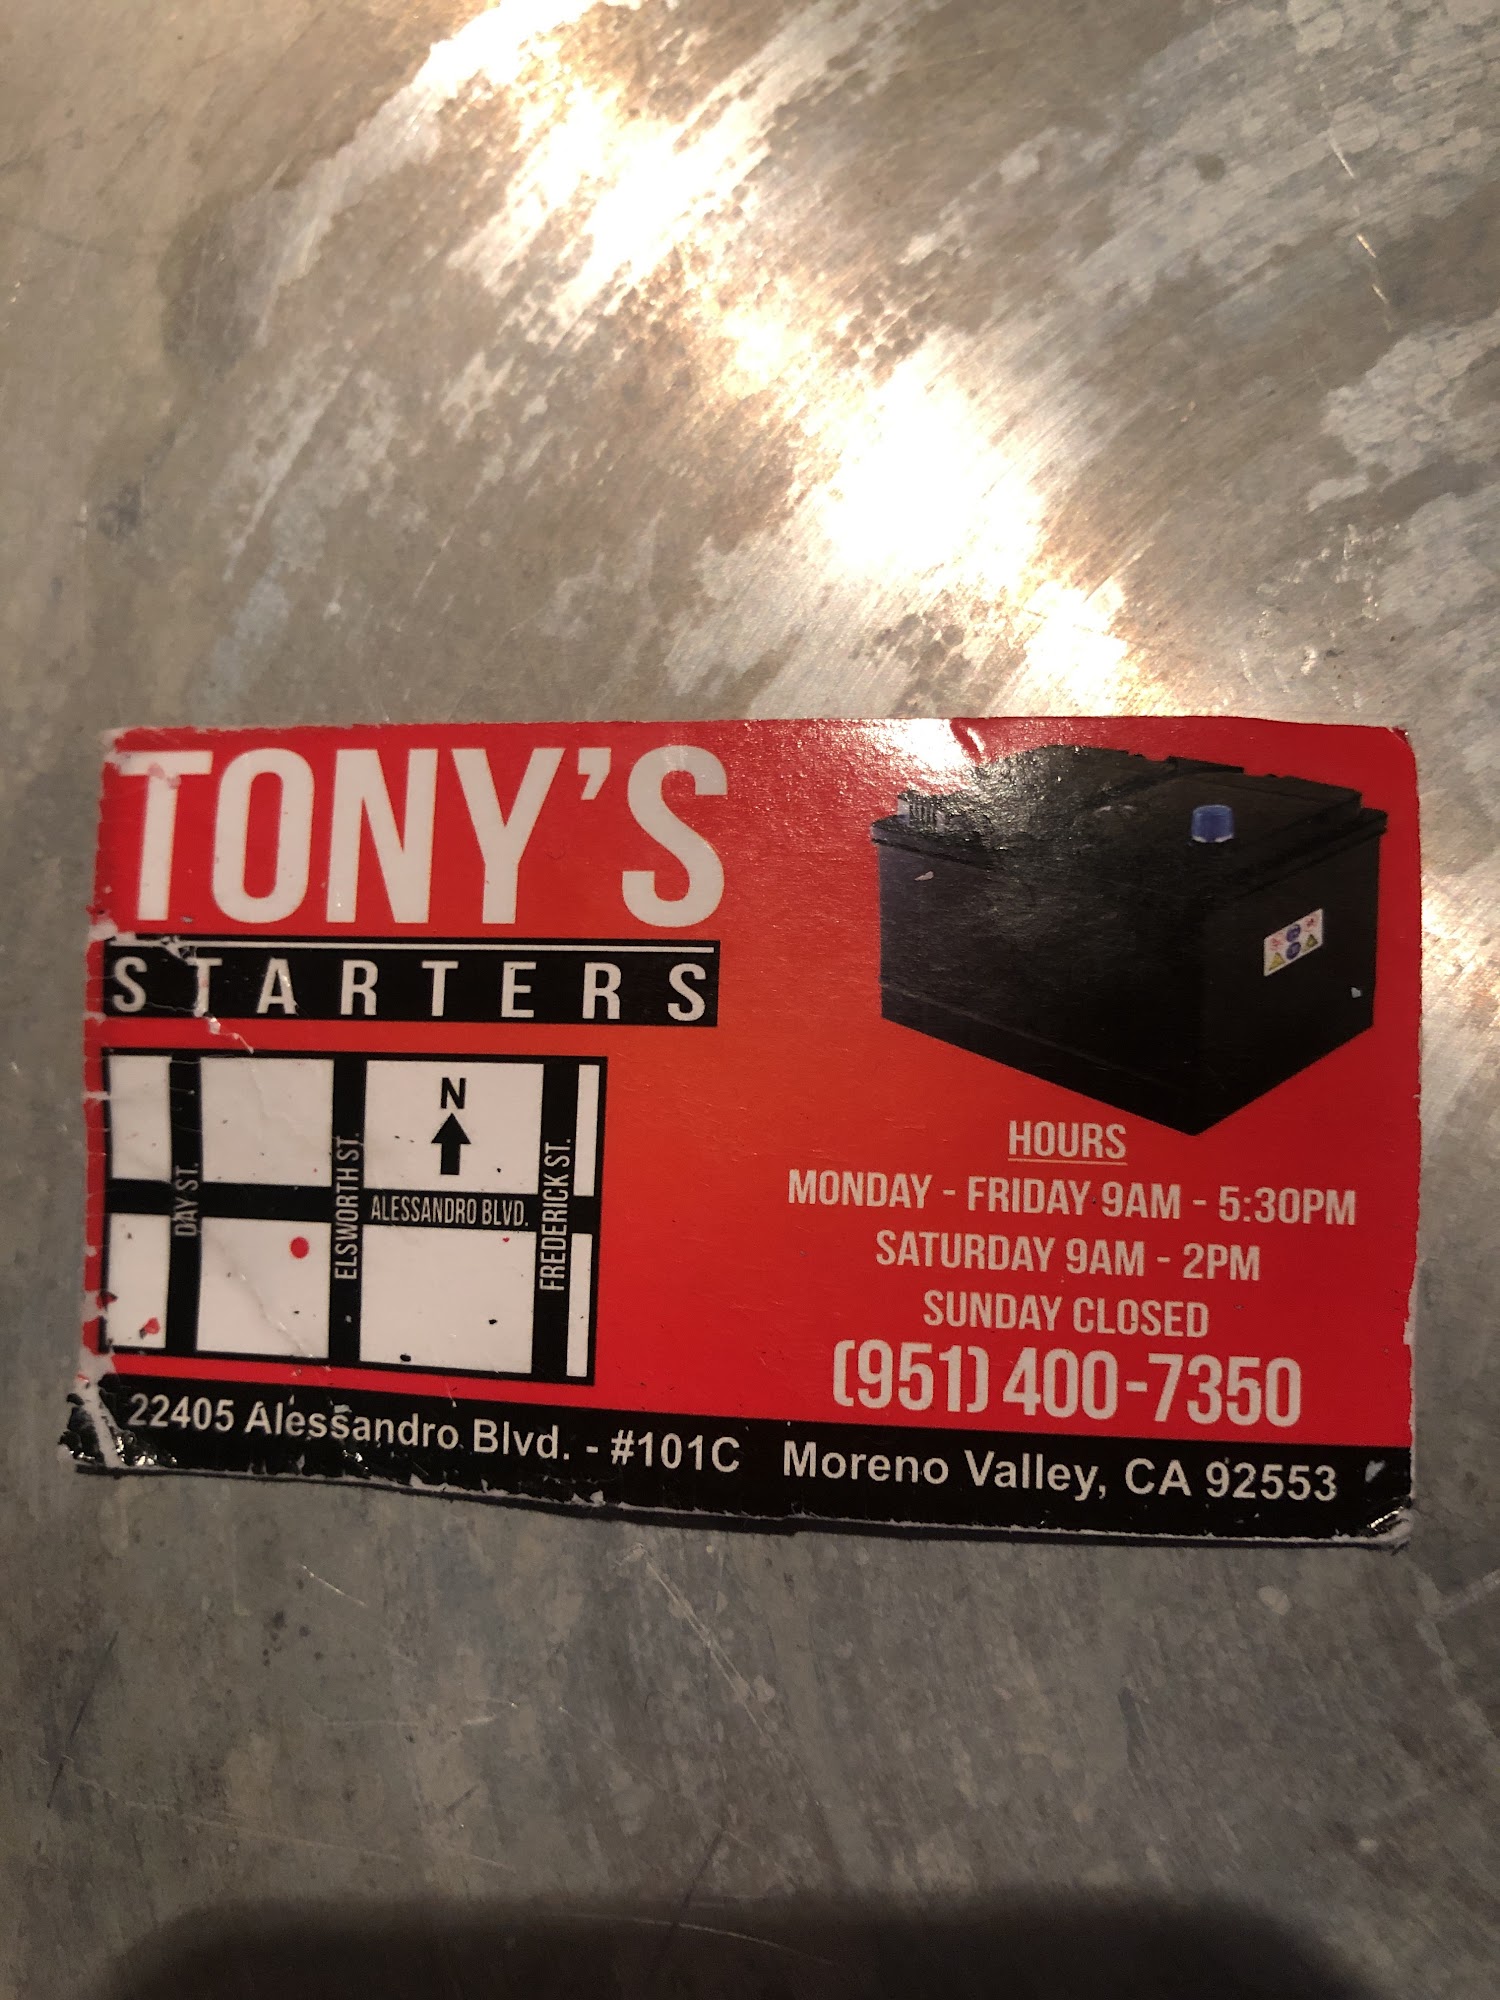 Tony's Starters & Alternators